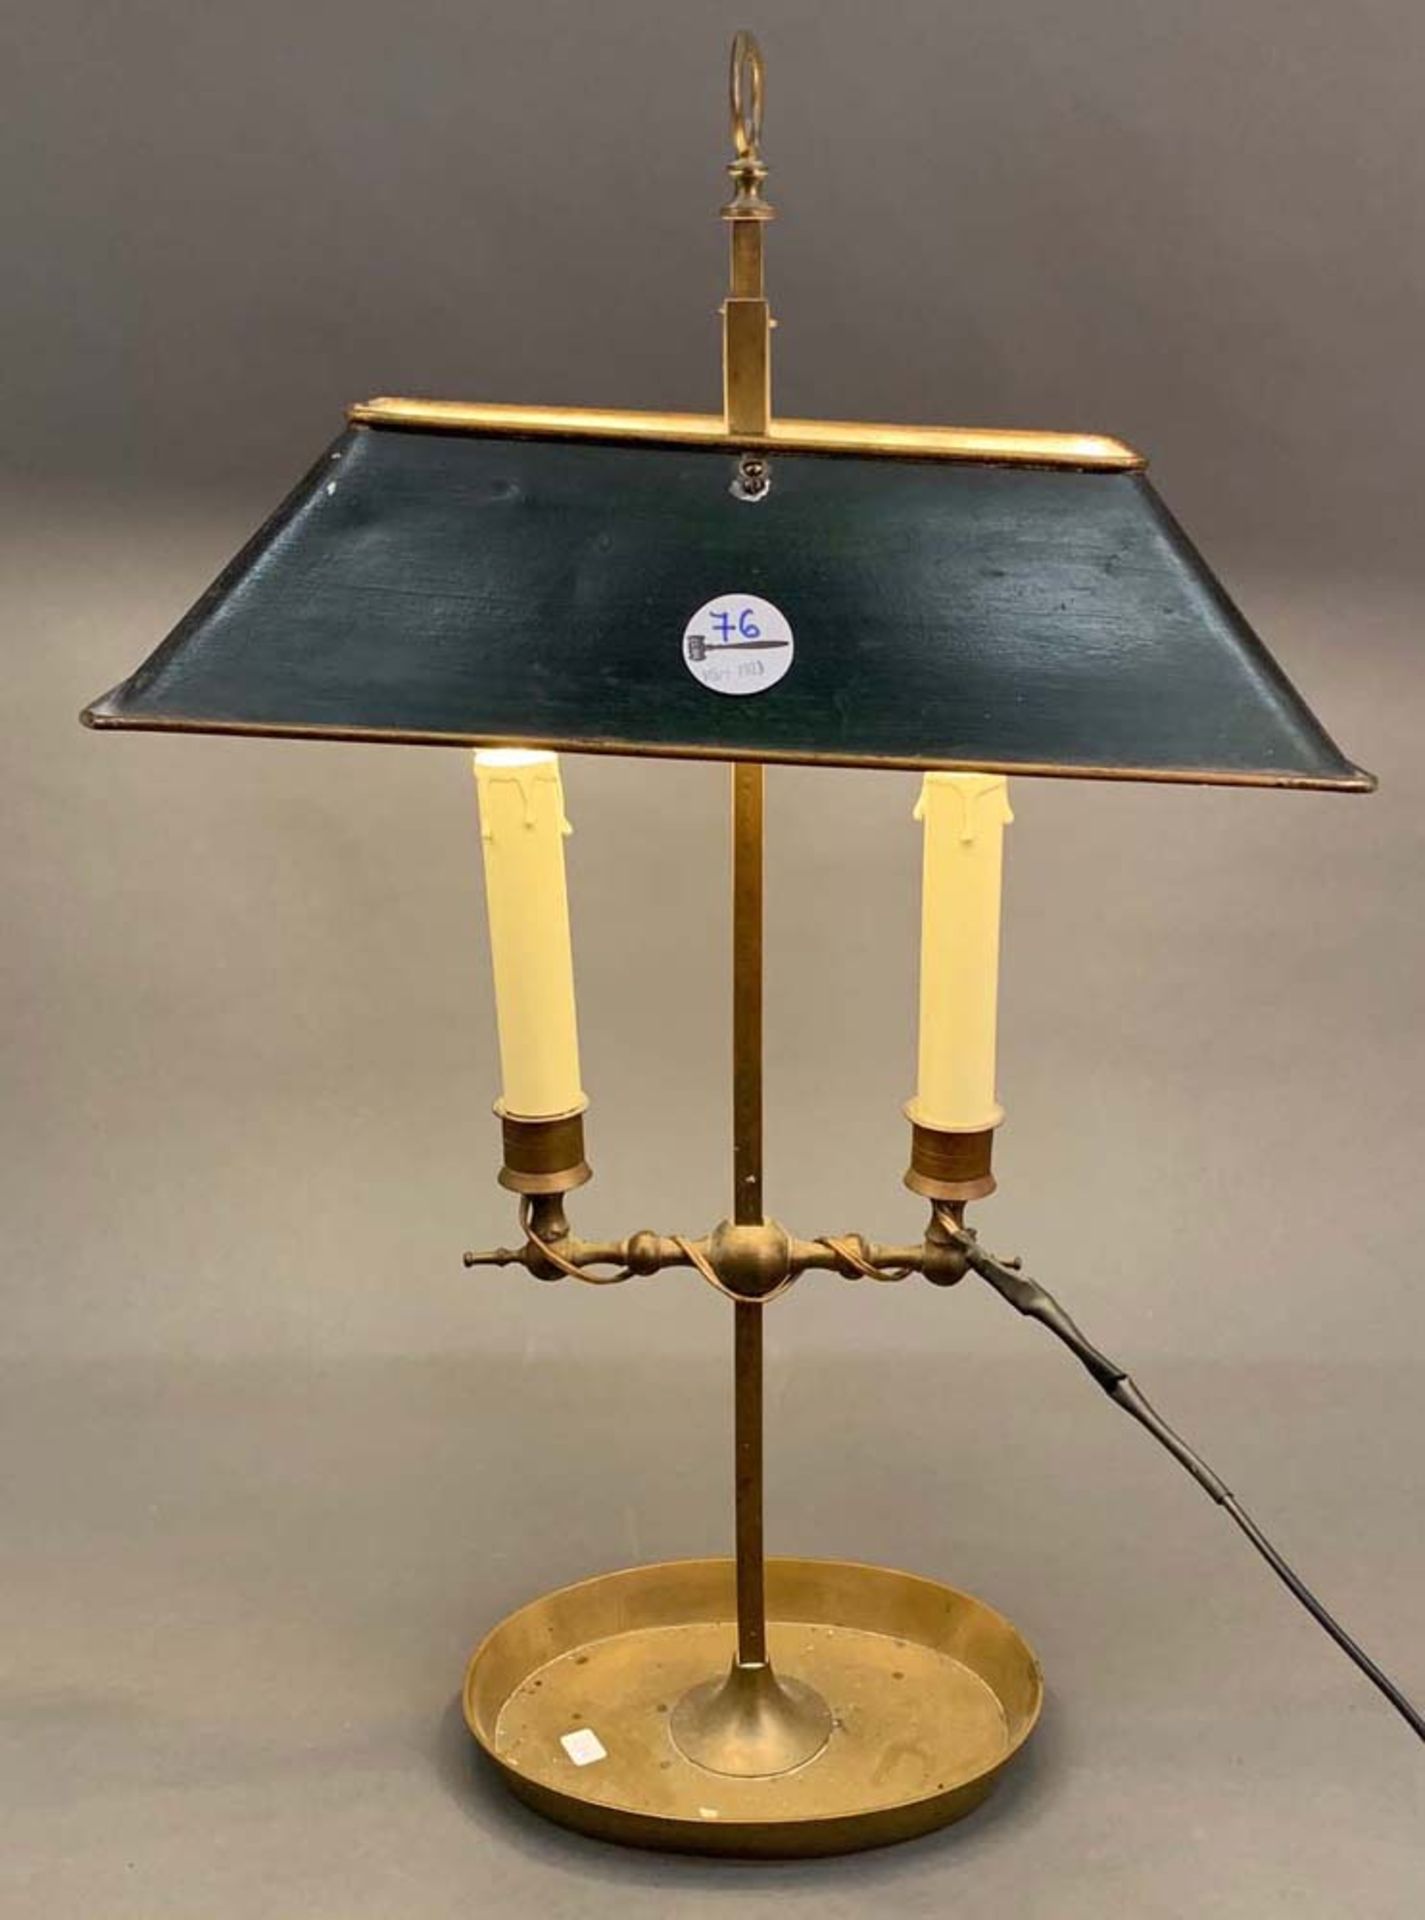 Bouillotte-Lampe. Frankreich 19. Jh. Messing, mit in Höhe verstellbarem Schirm, H=60 cm. (Funktion